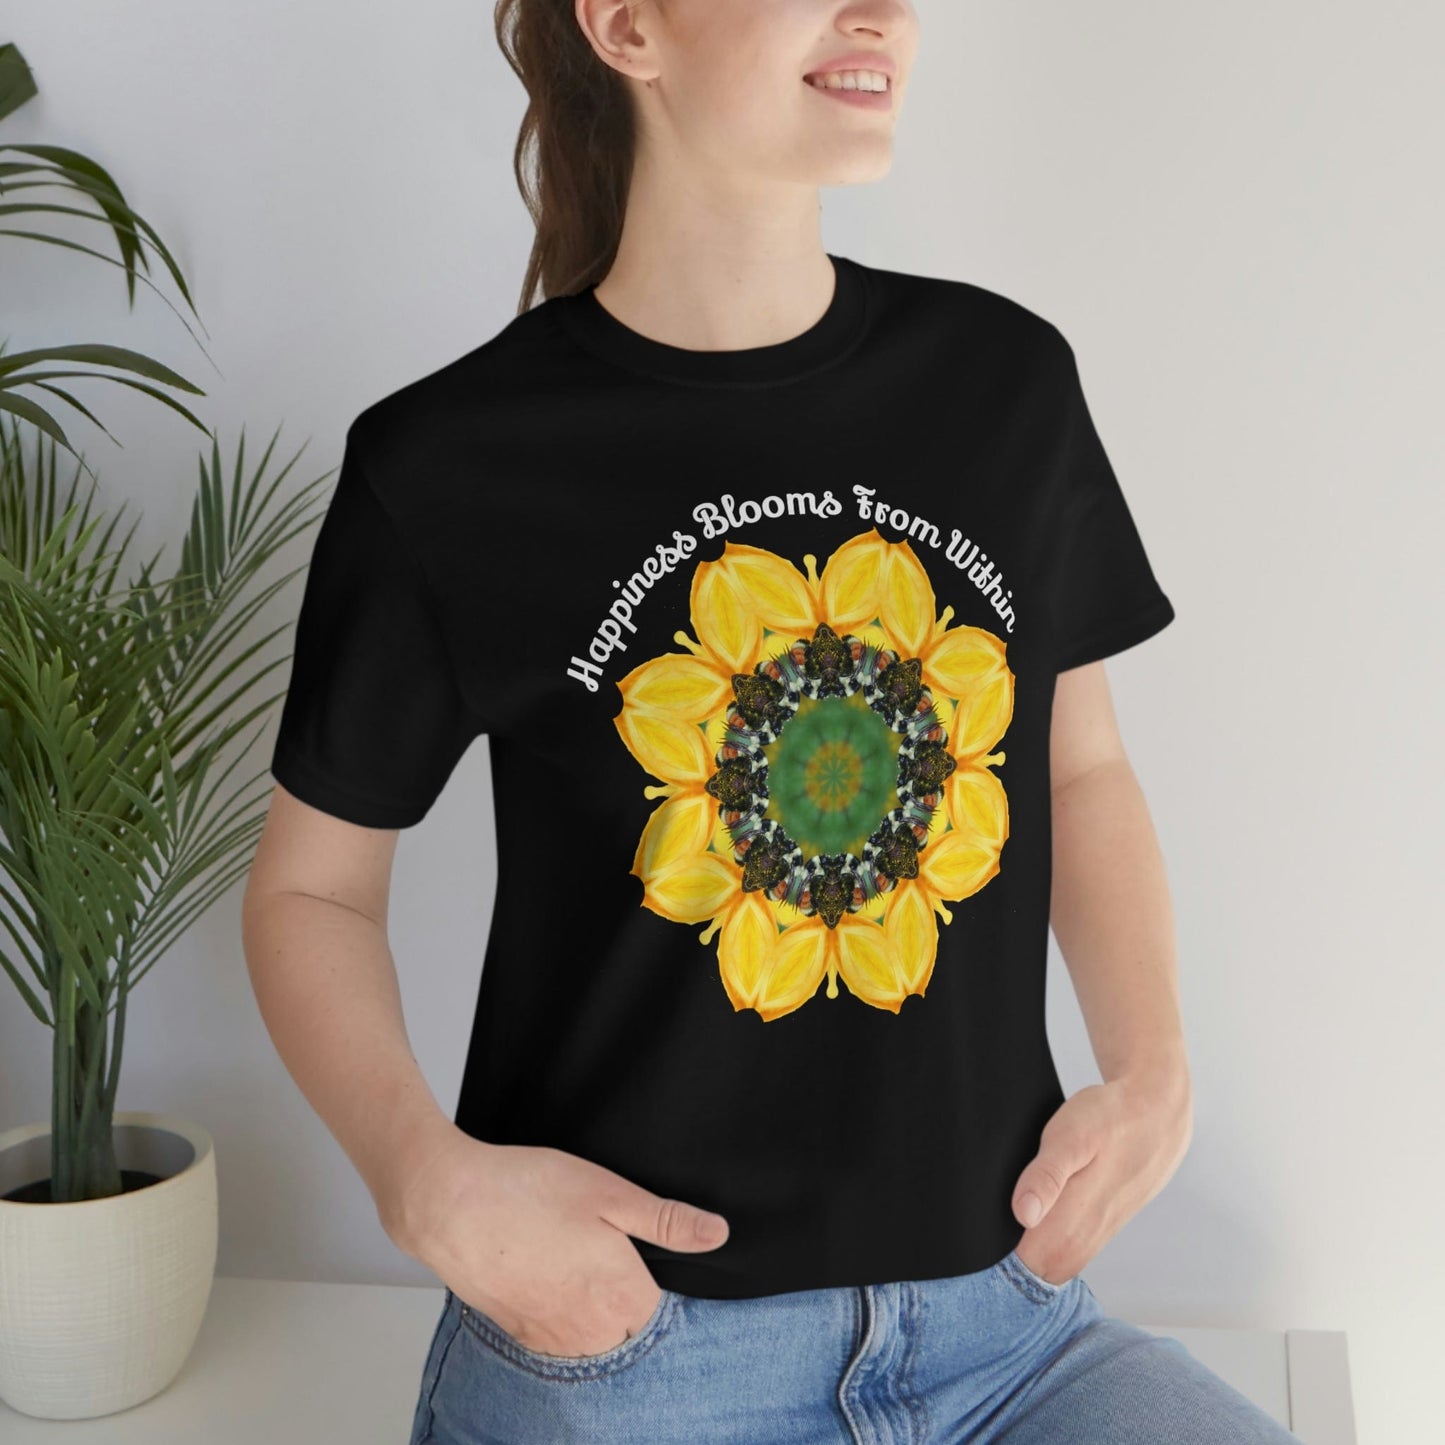 Bee T Shirt, Best Selling Shirts, Poet Shirt, Zen Mystical Cottage Core Insect Shirt, Witty Bug Shirt, Cute Shirts Teens, Mandala T Shirt A